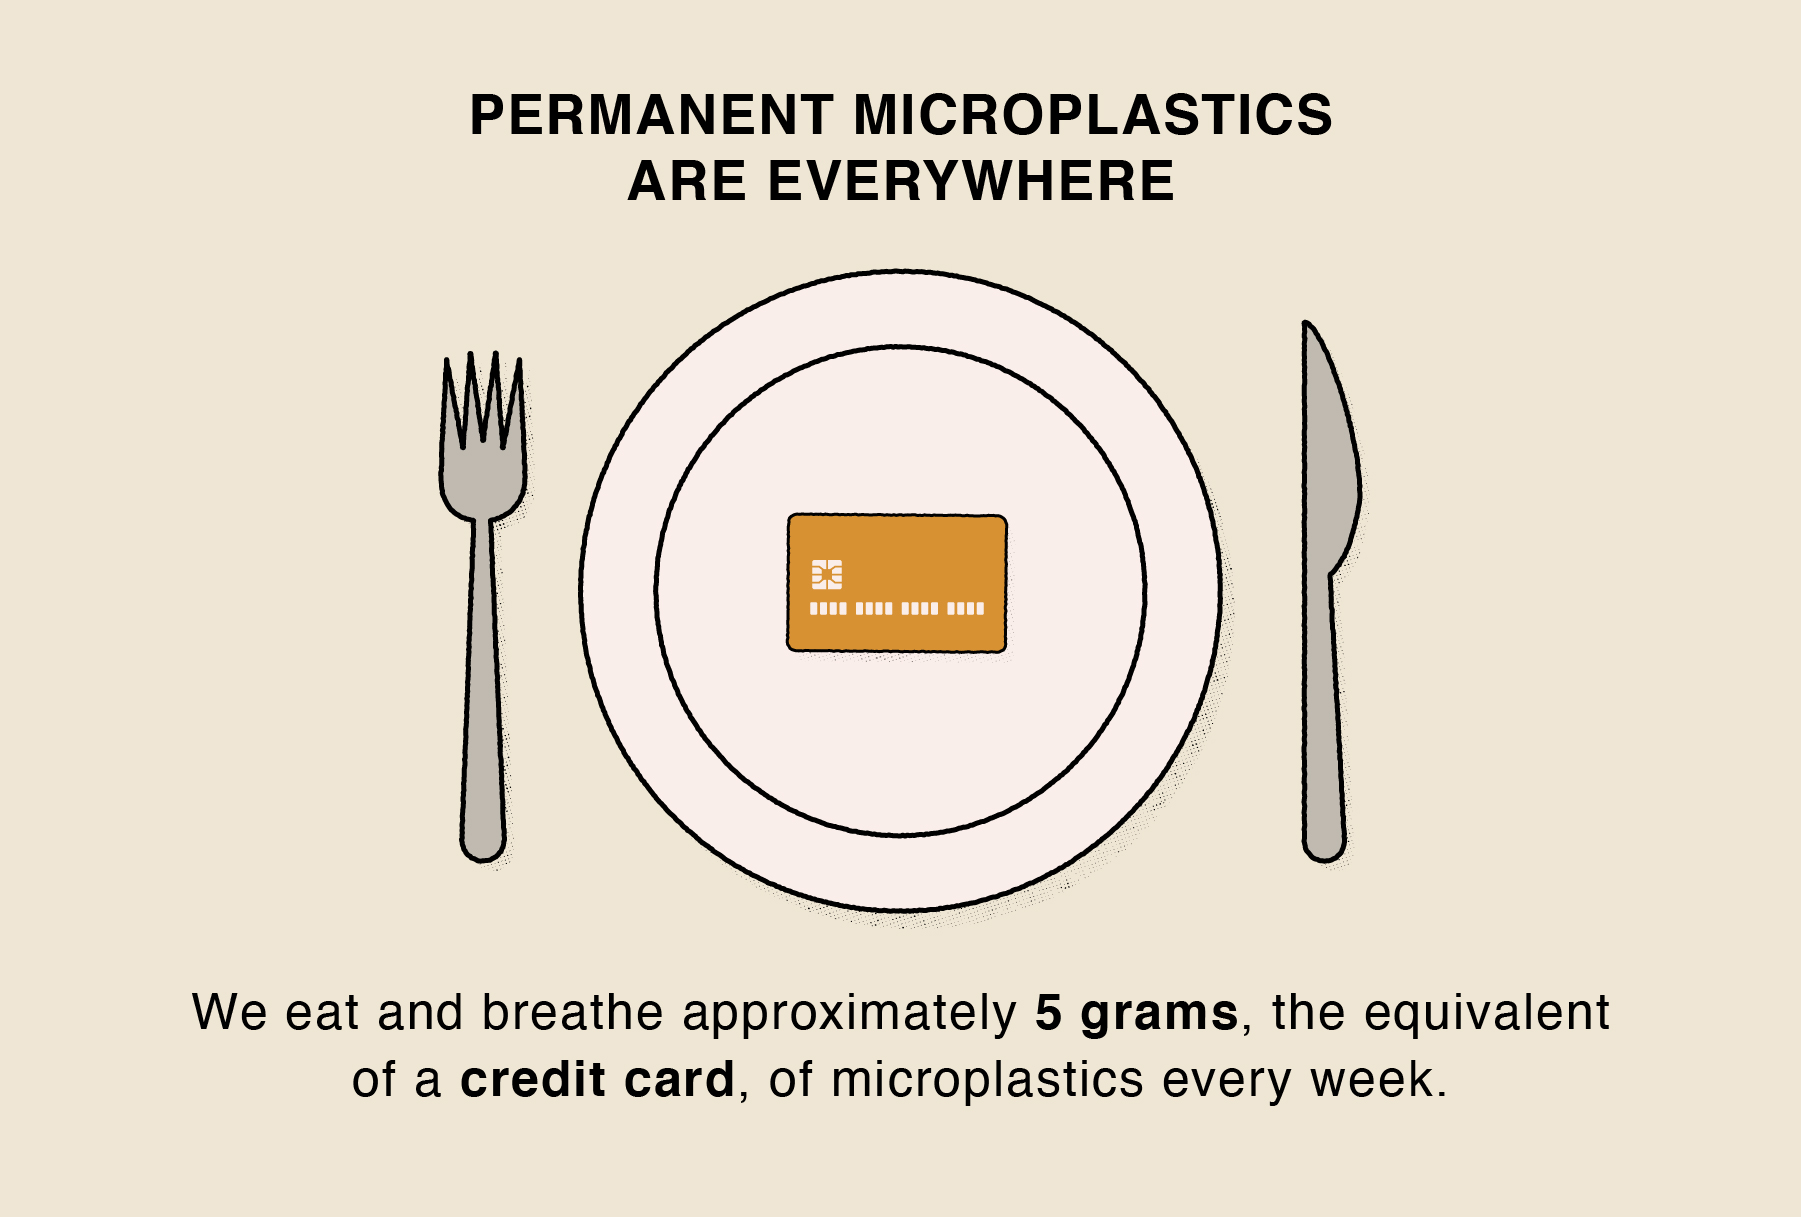 We eat and breath 5 grams of plastic every week